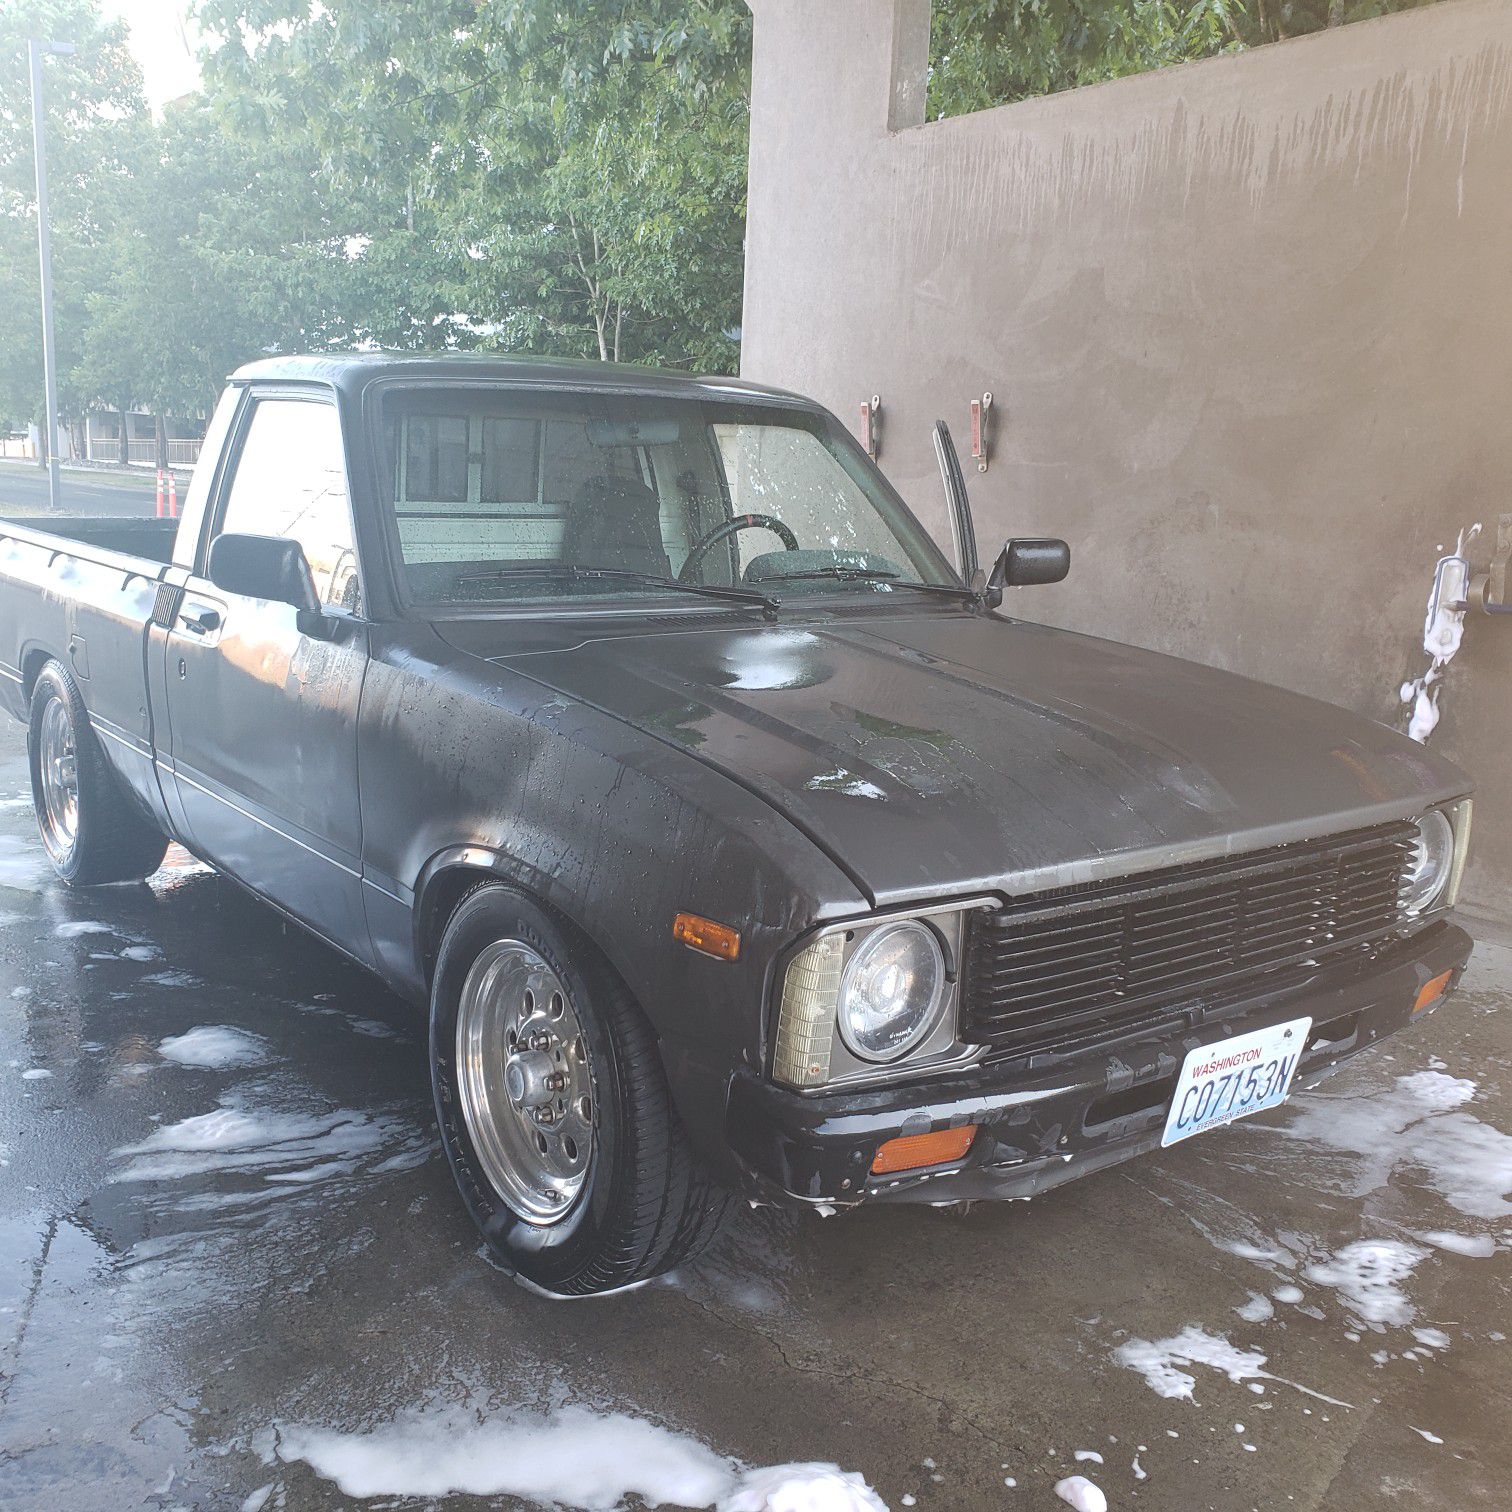 1981 Toyota Pickup